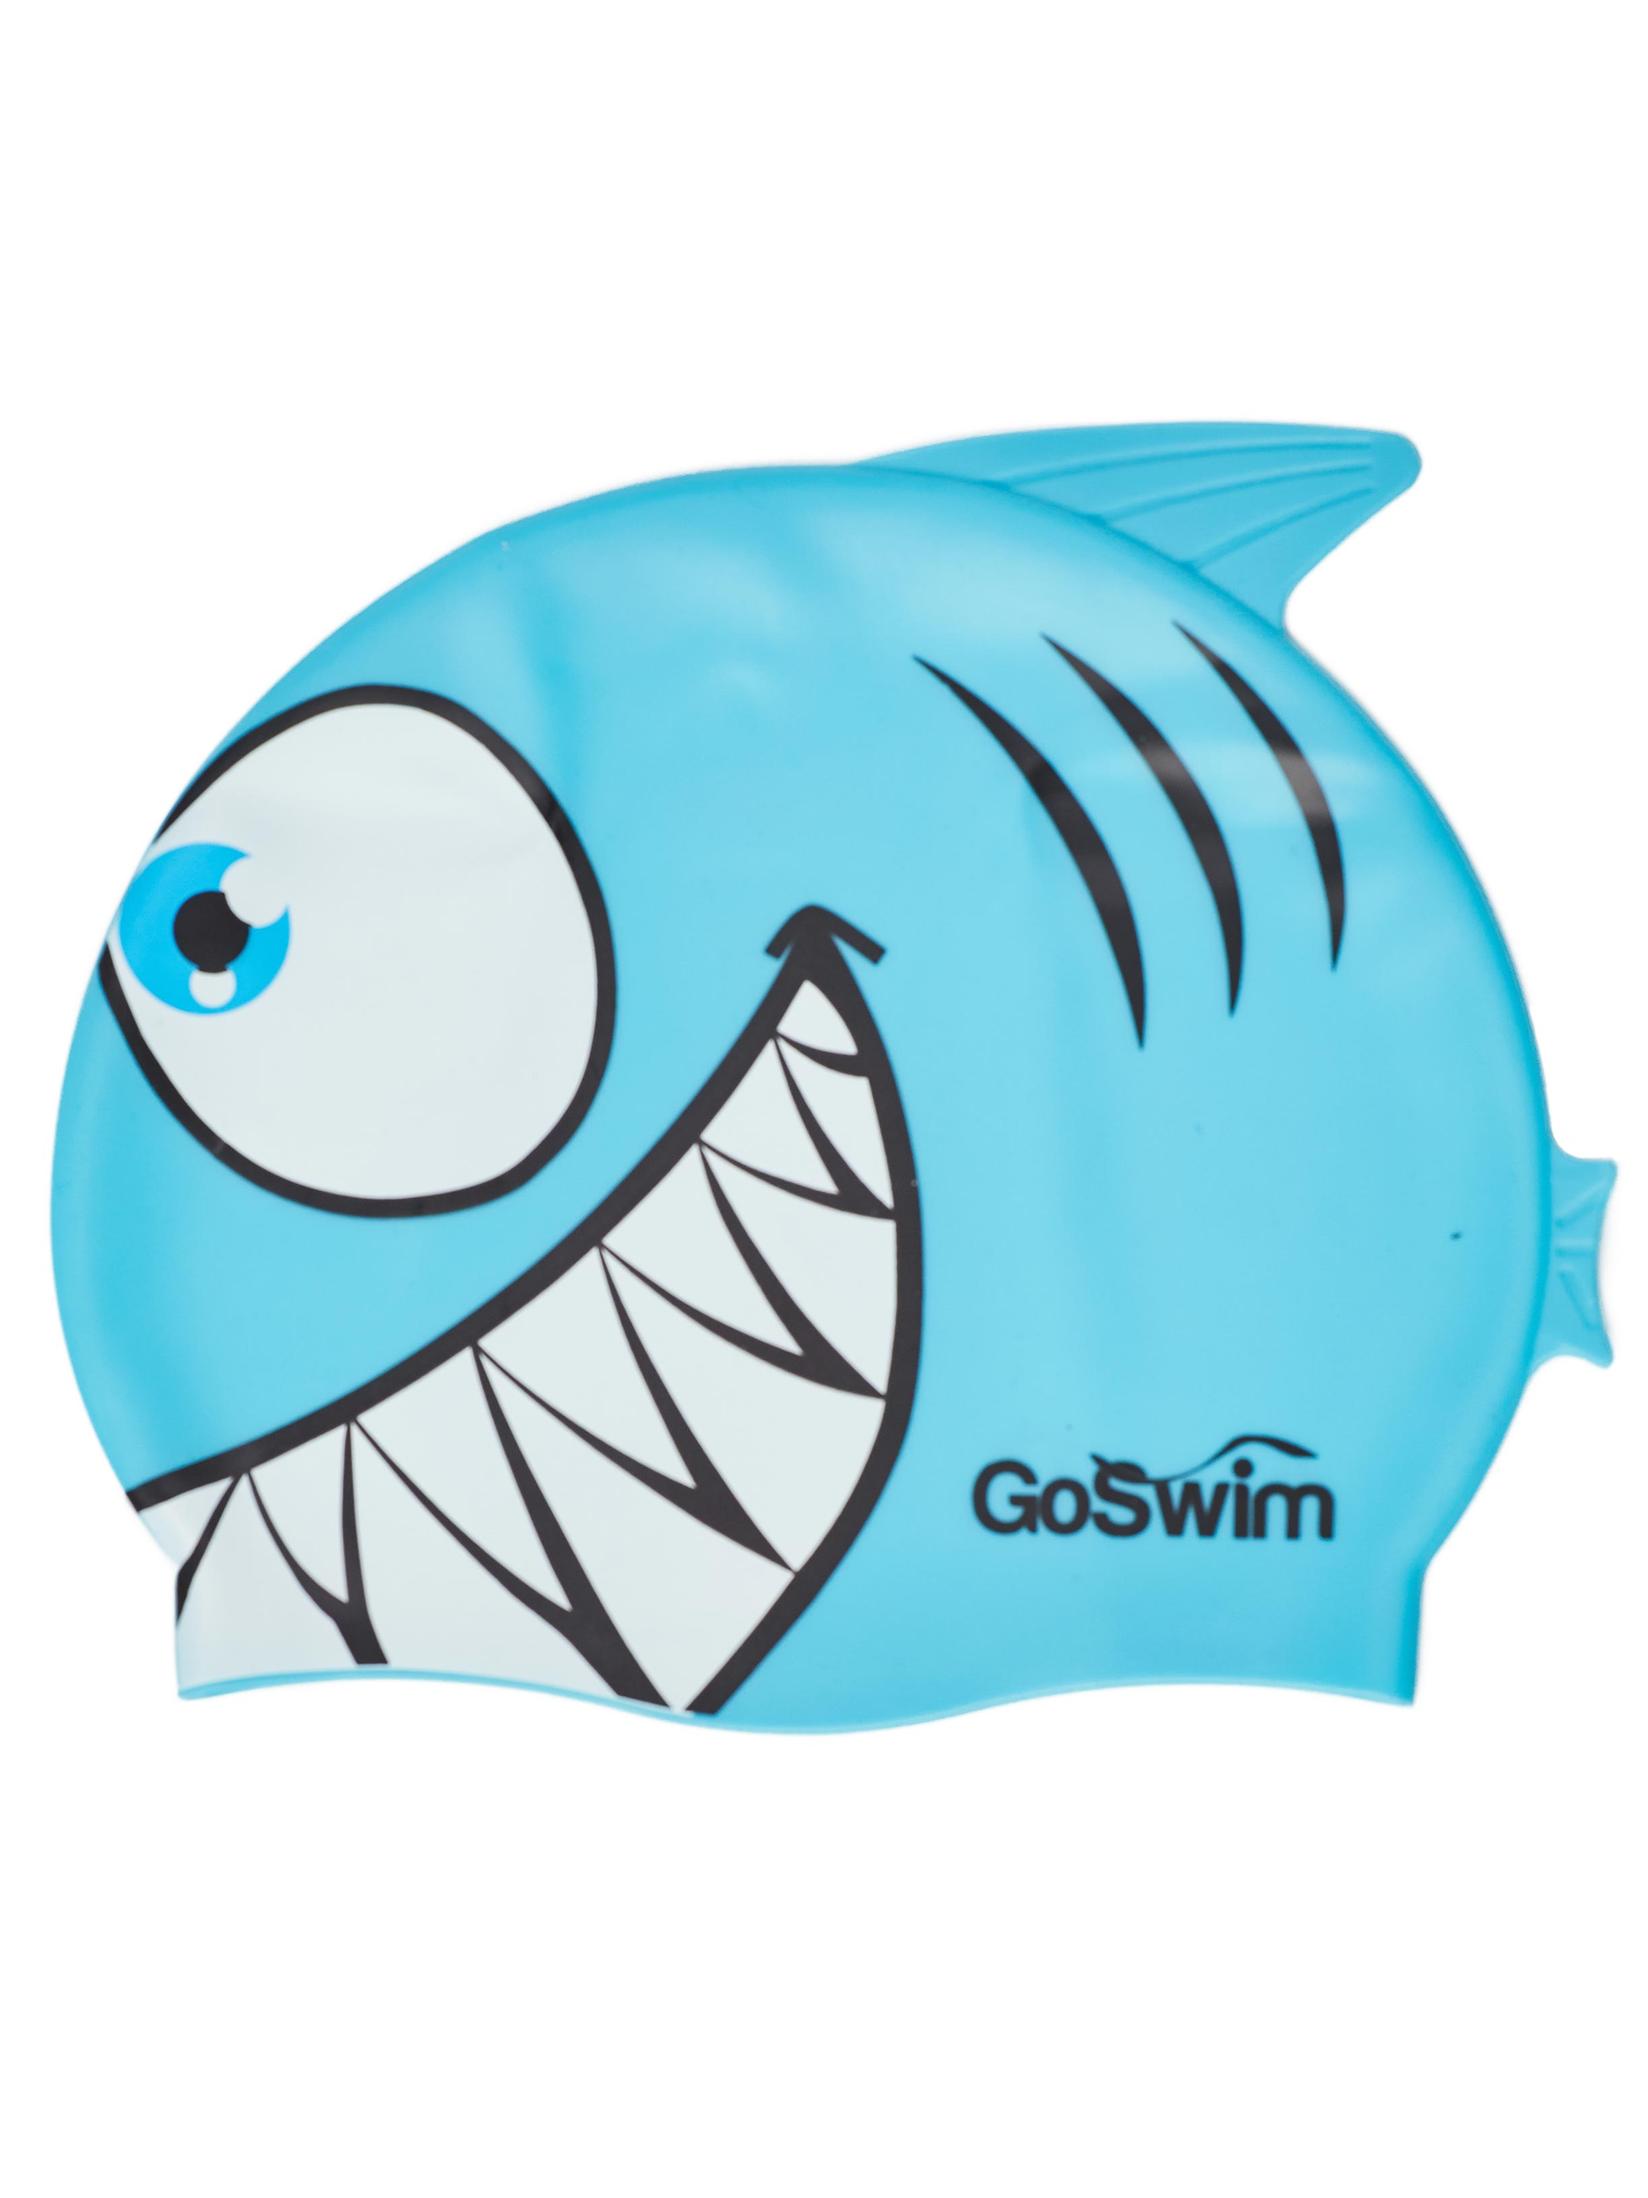 Selected image for GO SWIM Dečije naočare i kapa za plivanje plavo-crvene